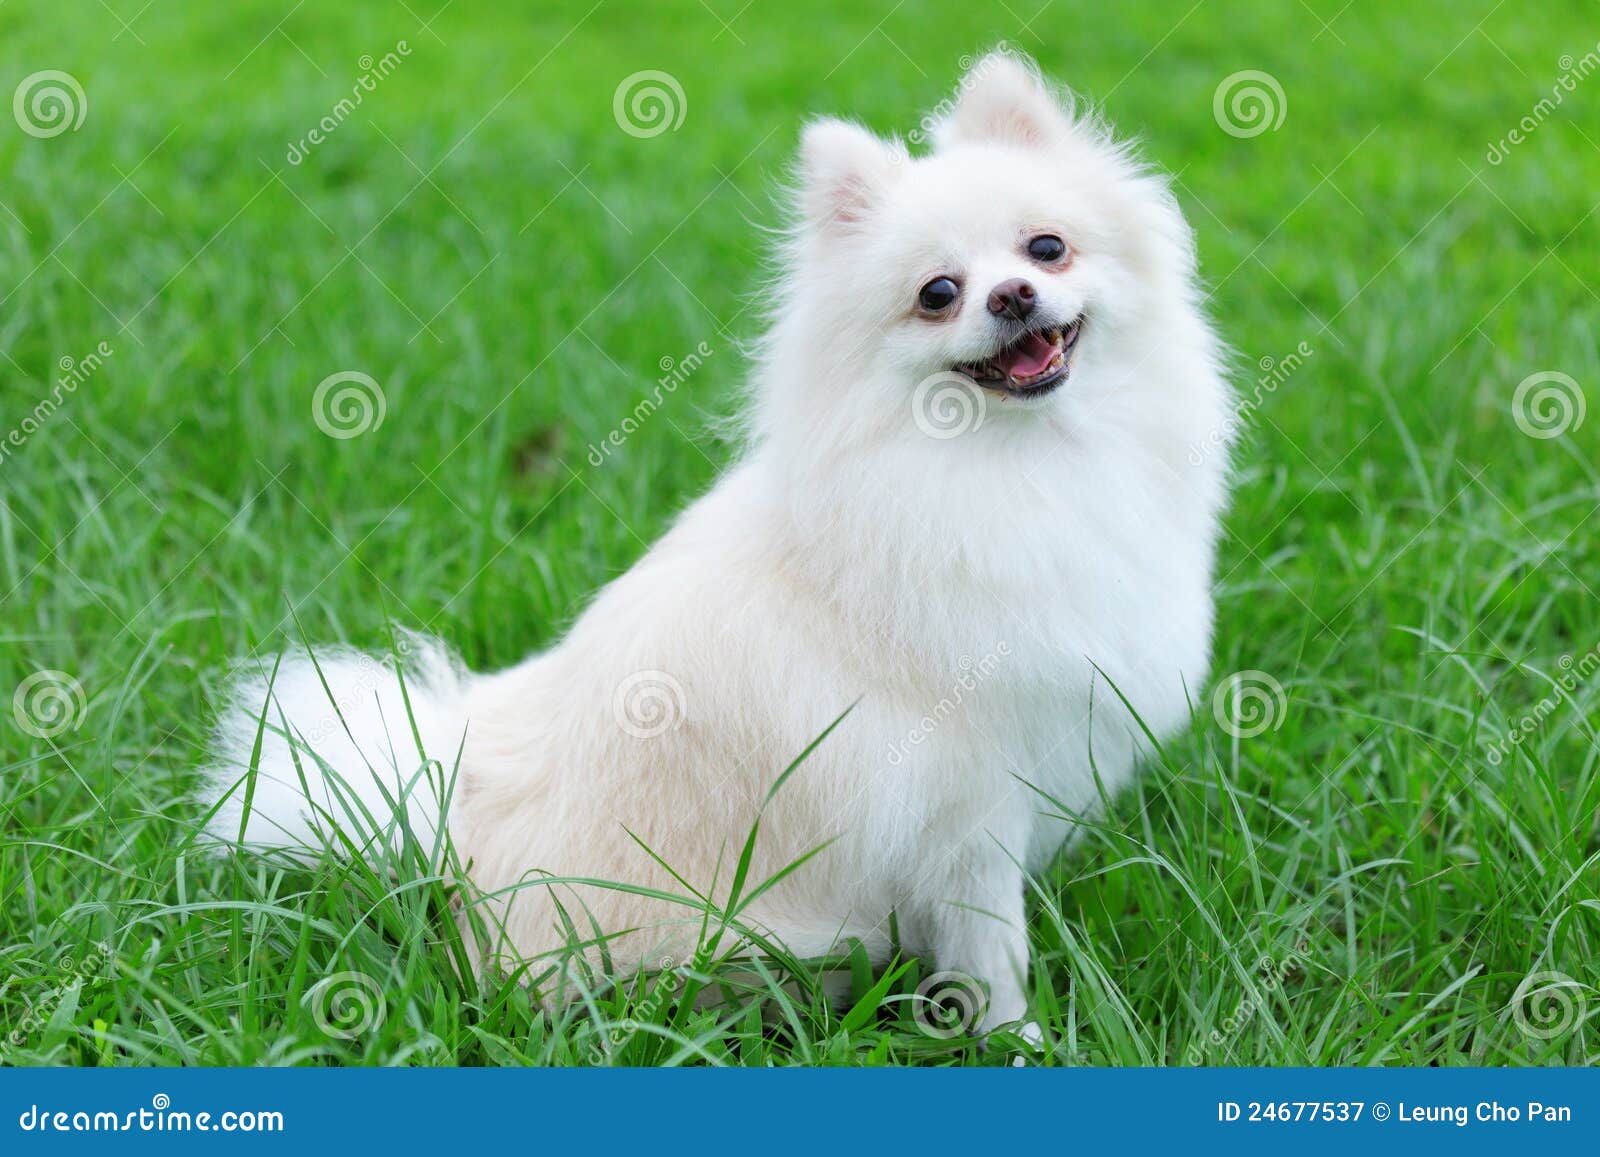 White pomeranian dog stock image. Image of grass, portrait - 24677537